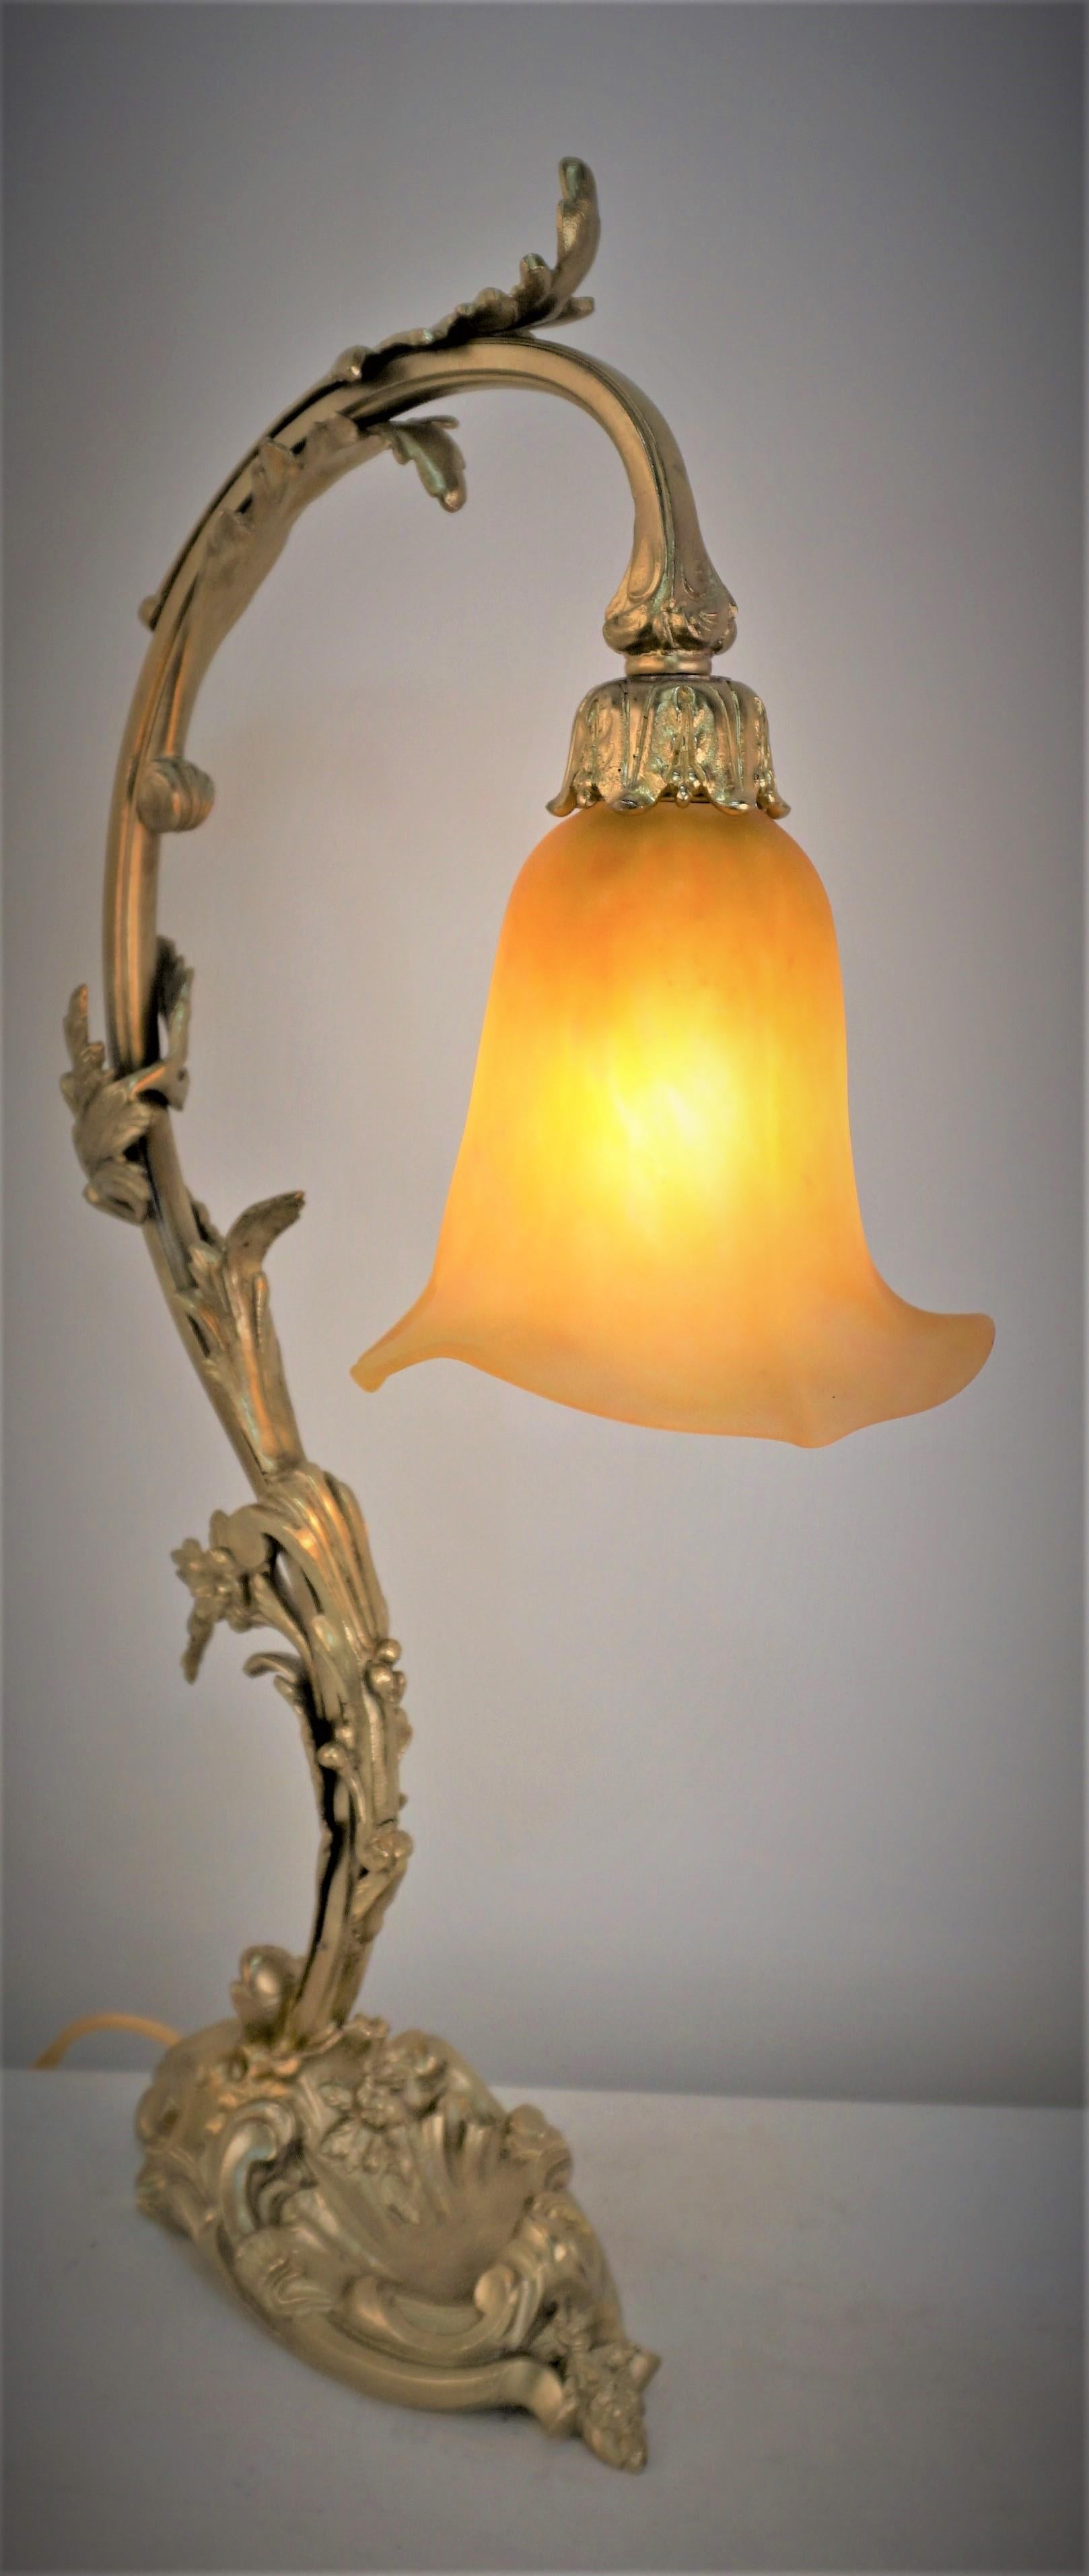 Blown art glass by Daum, fantastic bronze base art nouveau table lamp.
Professionally rewired.